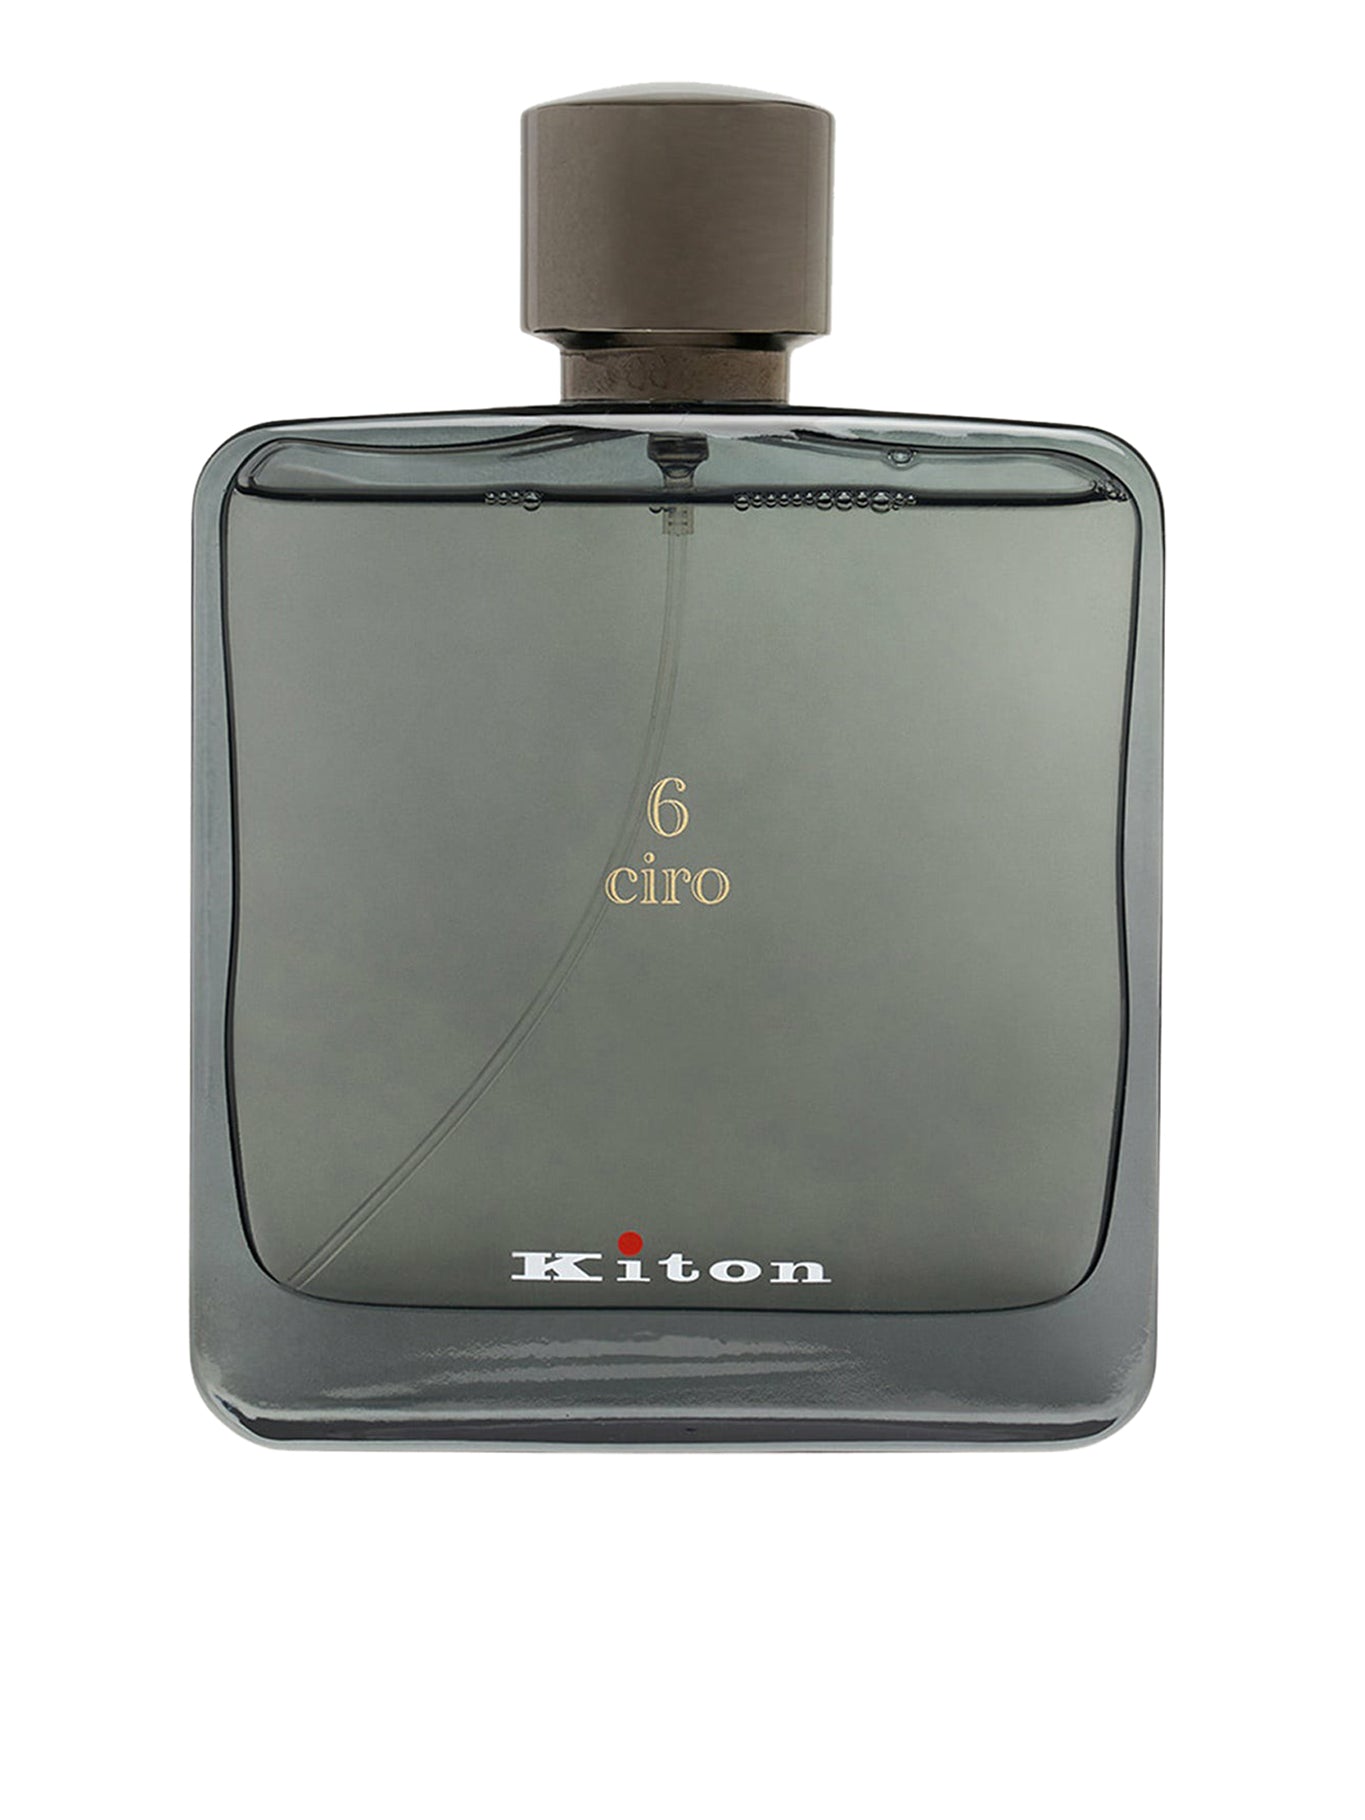 CIRO perfume